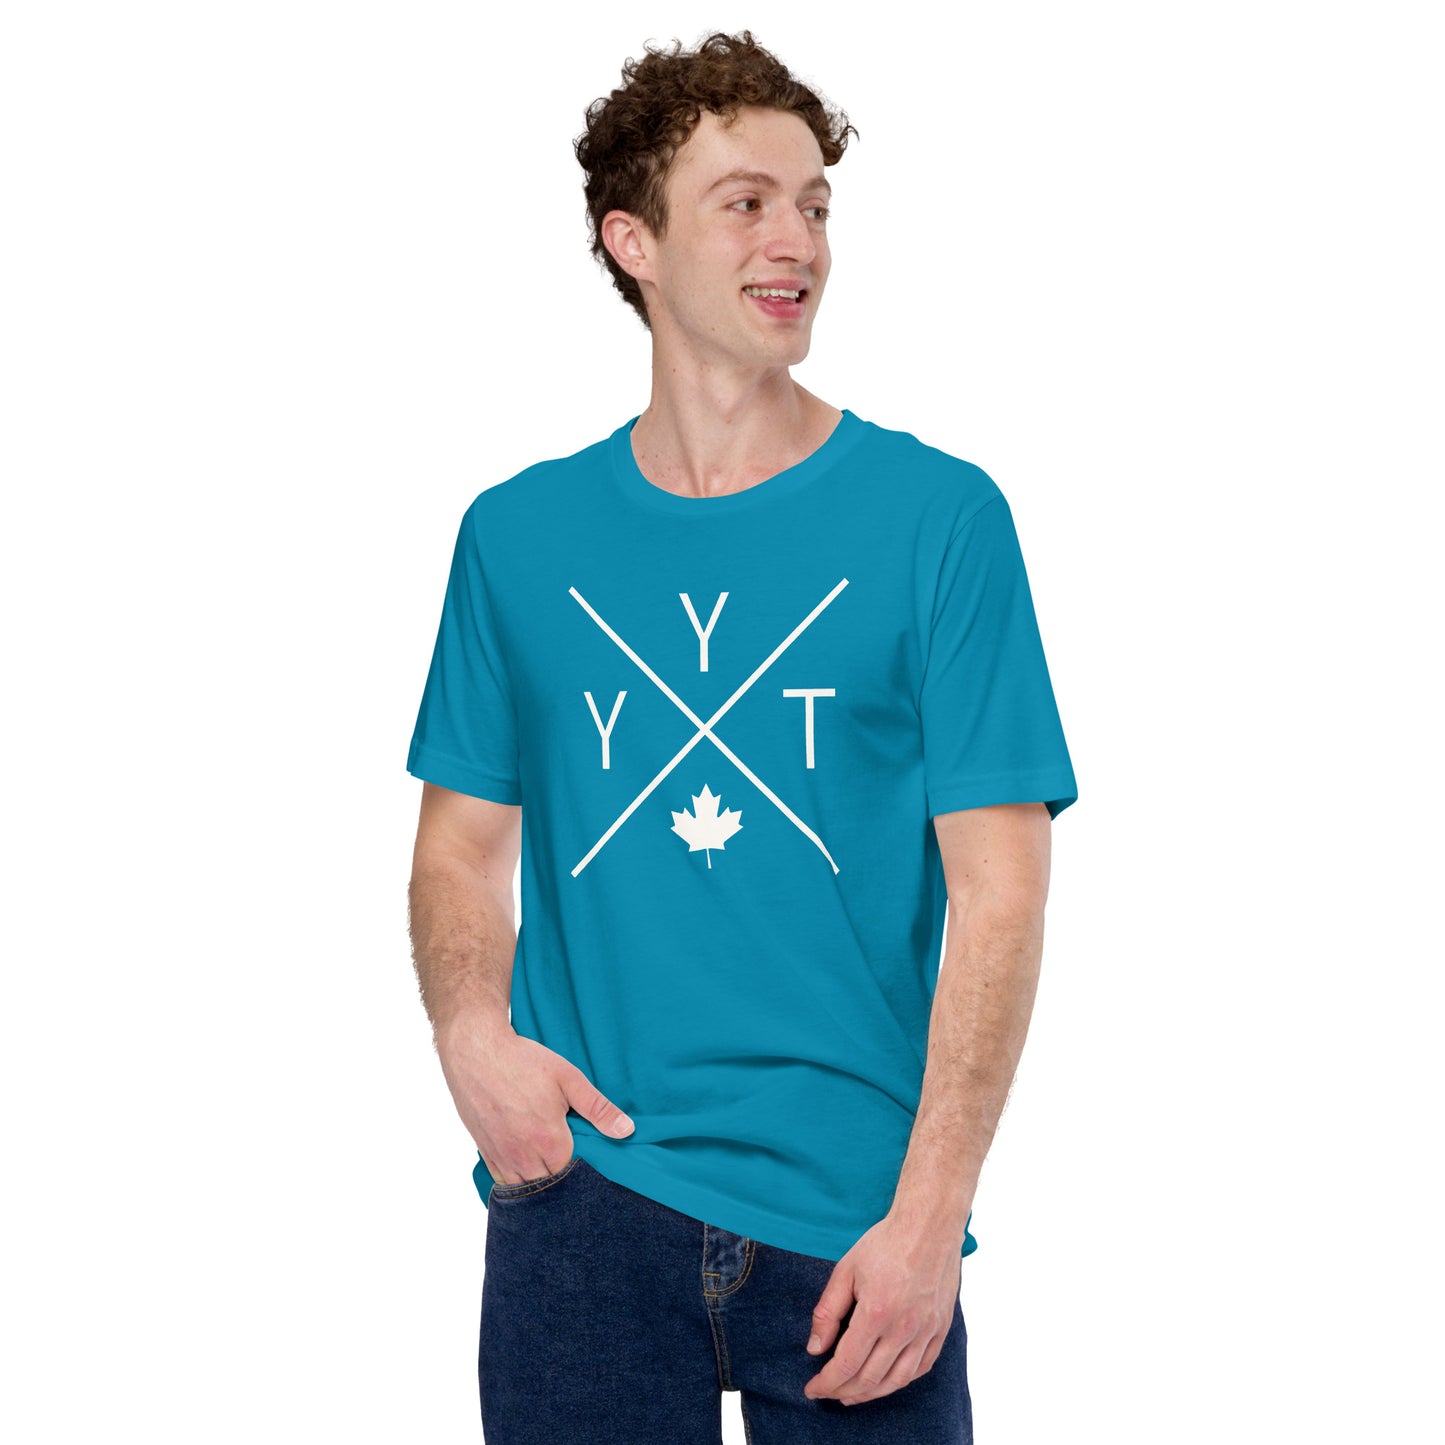 Crossed-X T-Shirt - White Graphic • YYT St. John's • YHM Designs - Image 11